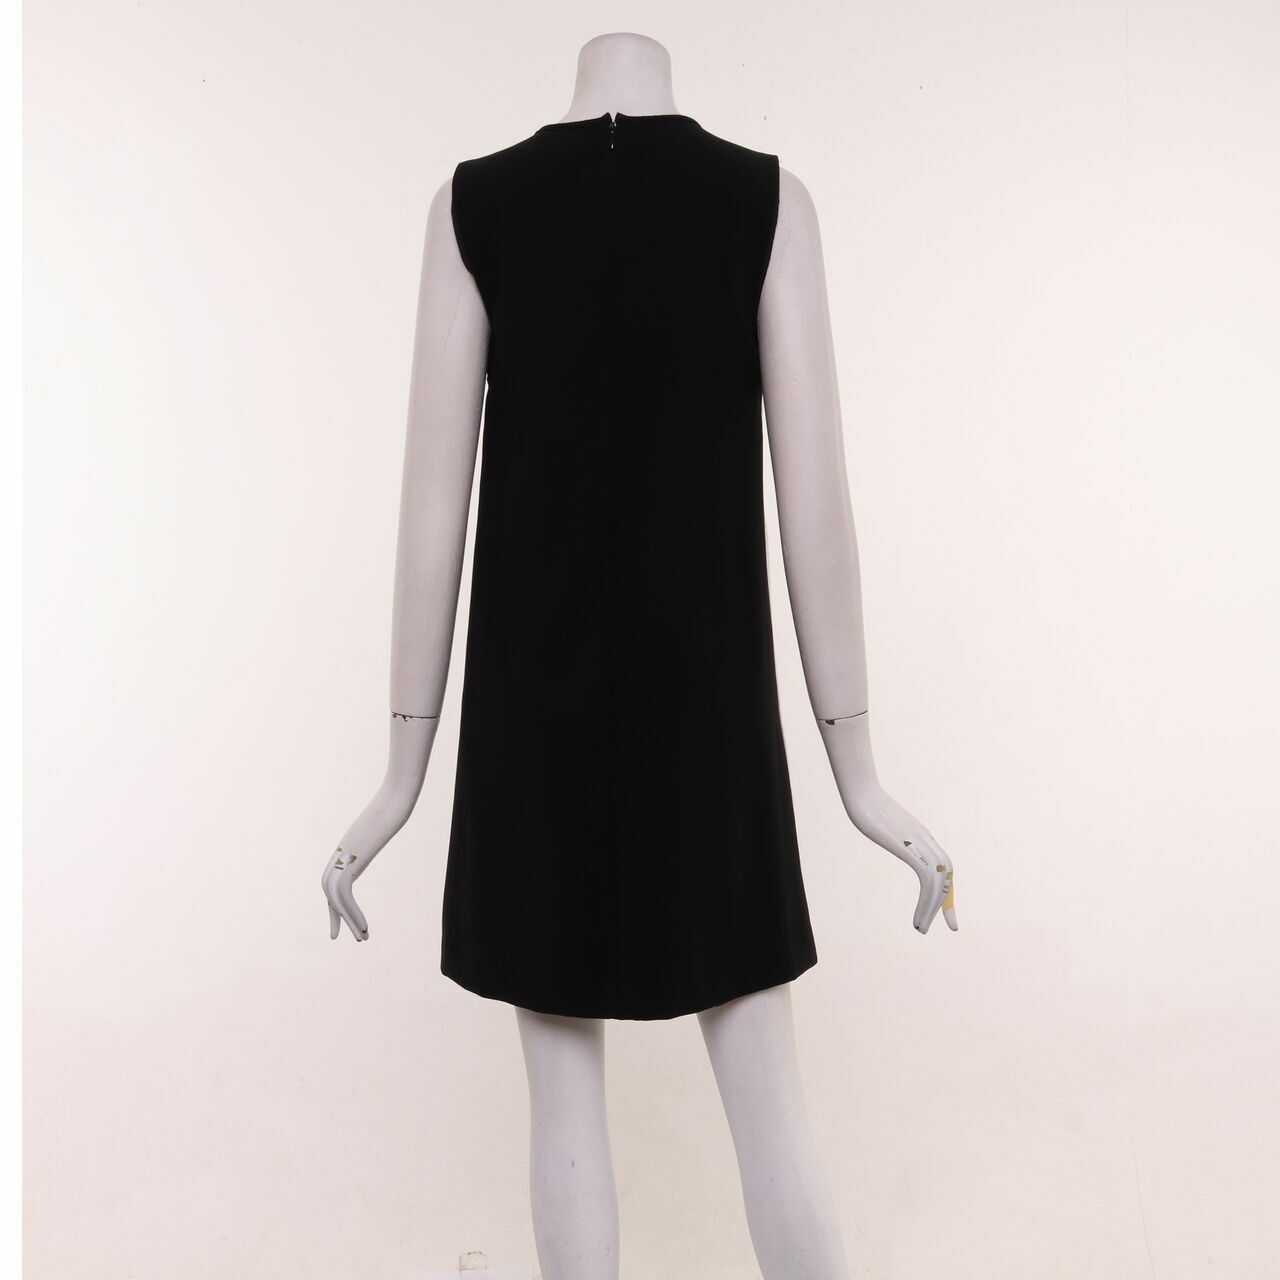 Victoria Beckham For Target Black & Light Grey Mini Dress